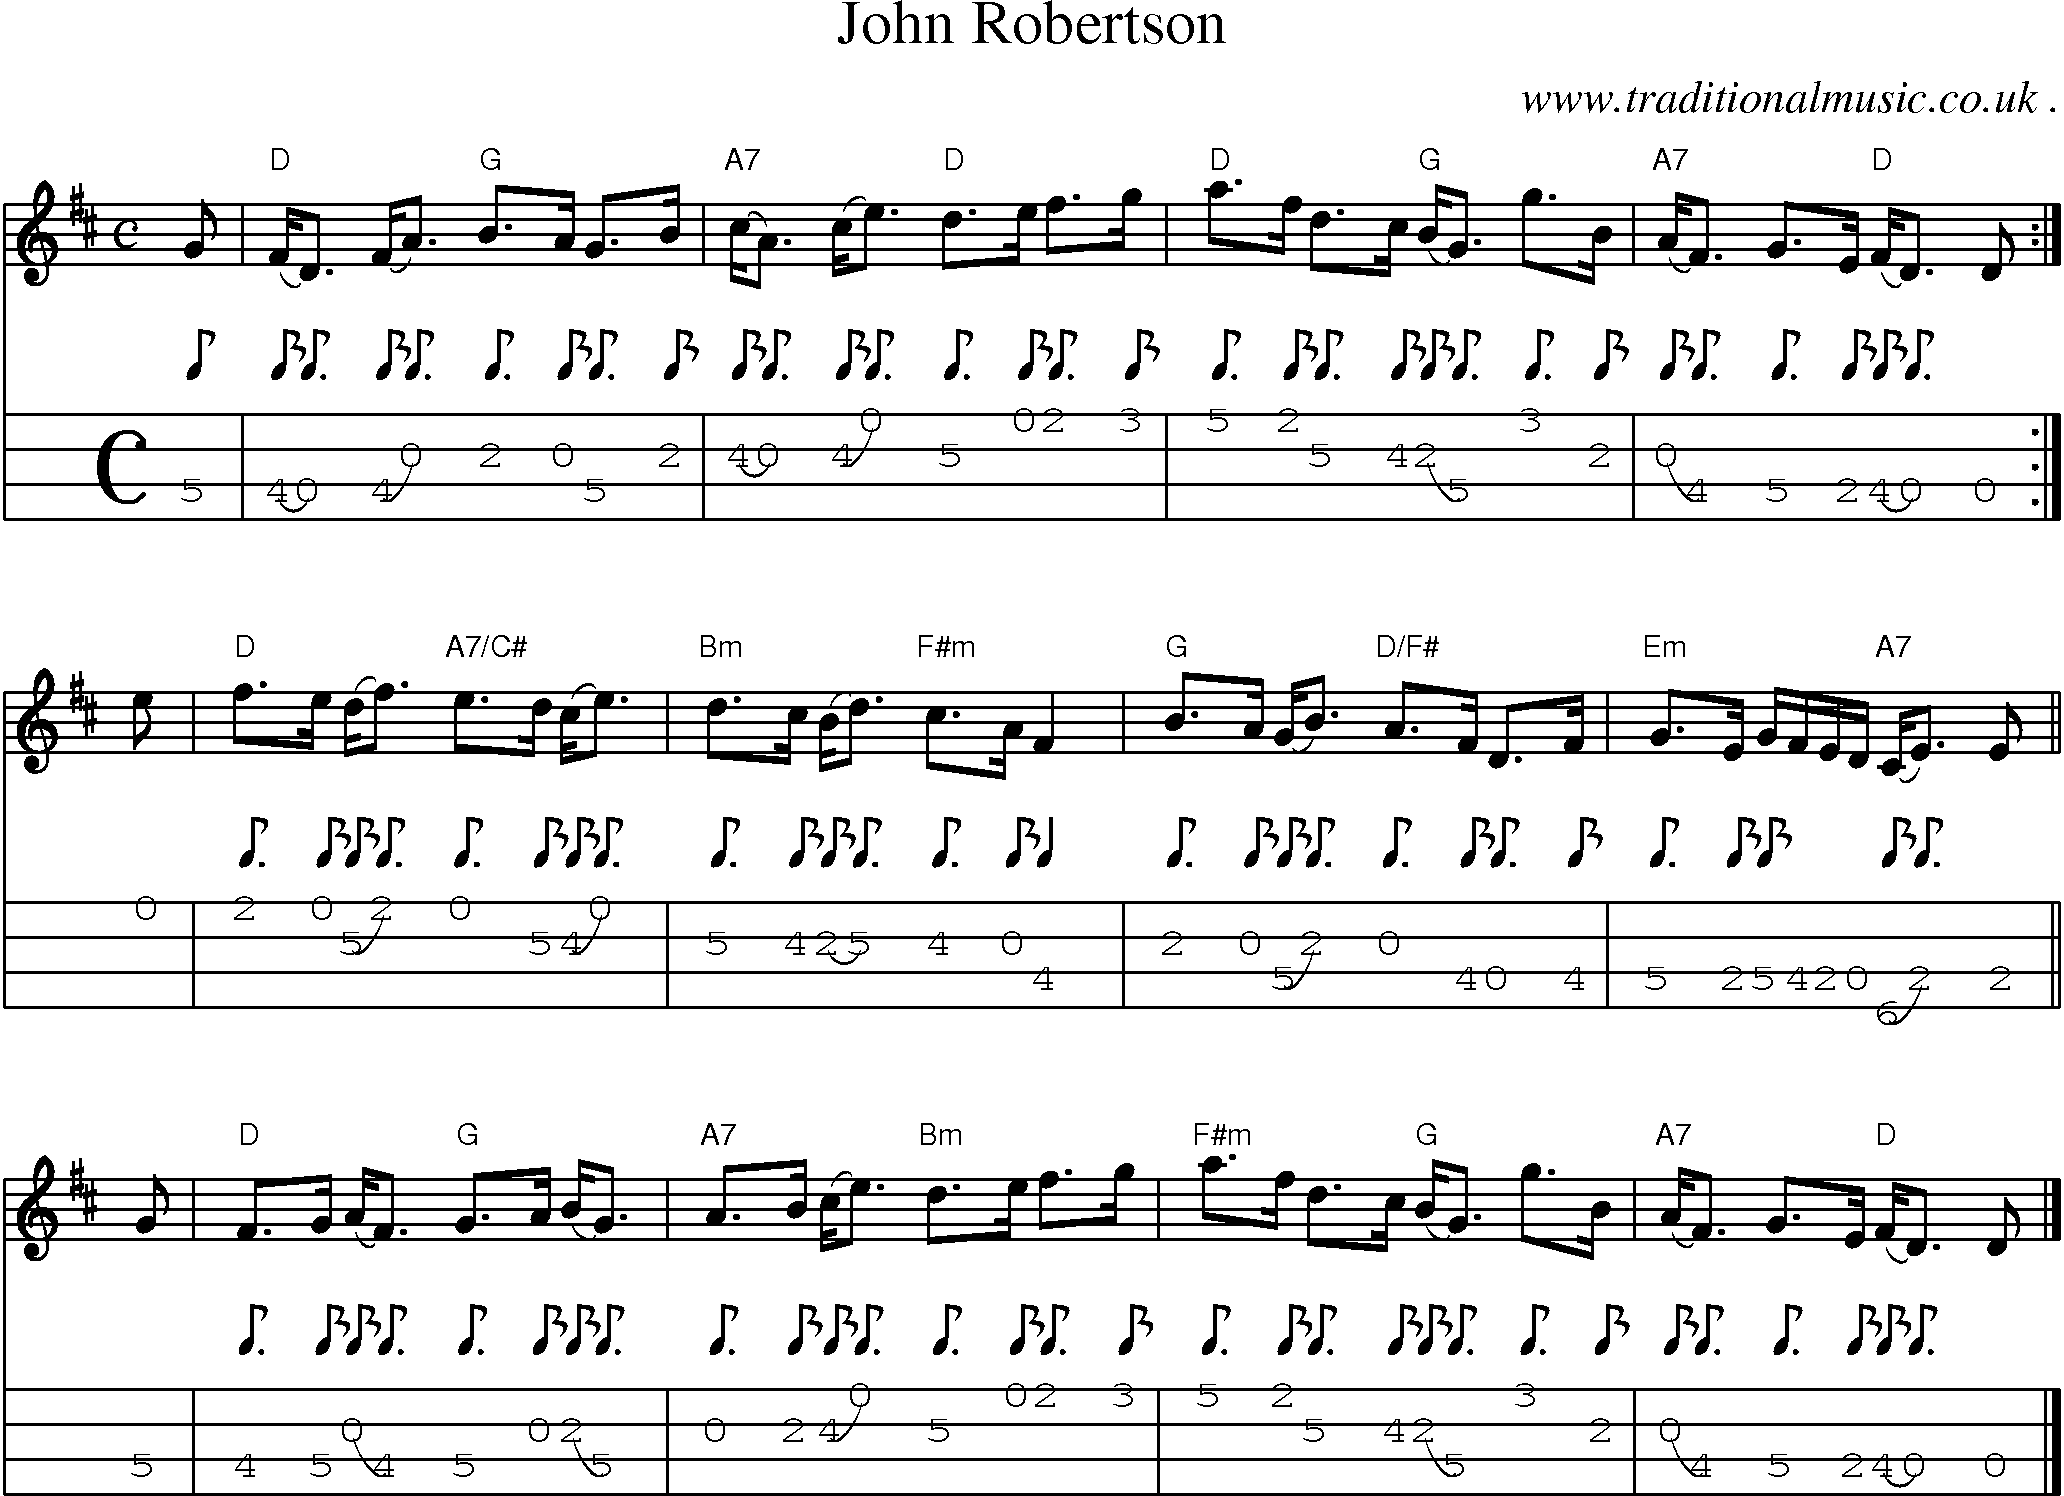 Sheet-music  score, Chords and Mandolin Tabs for John Robertson